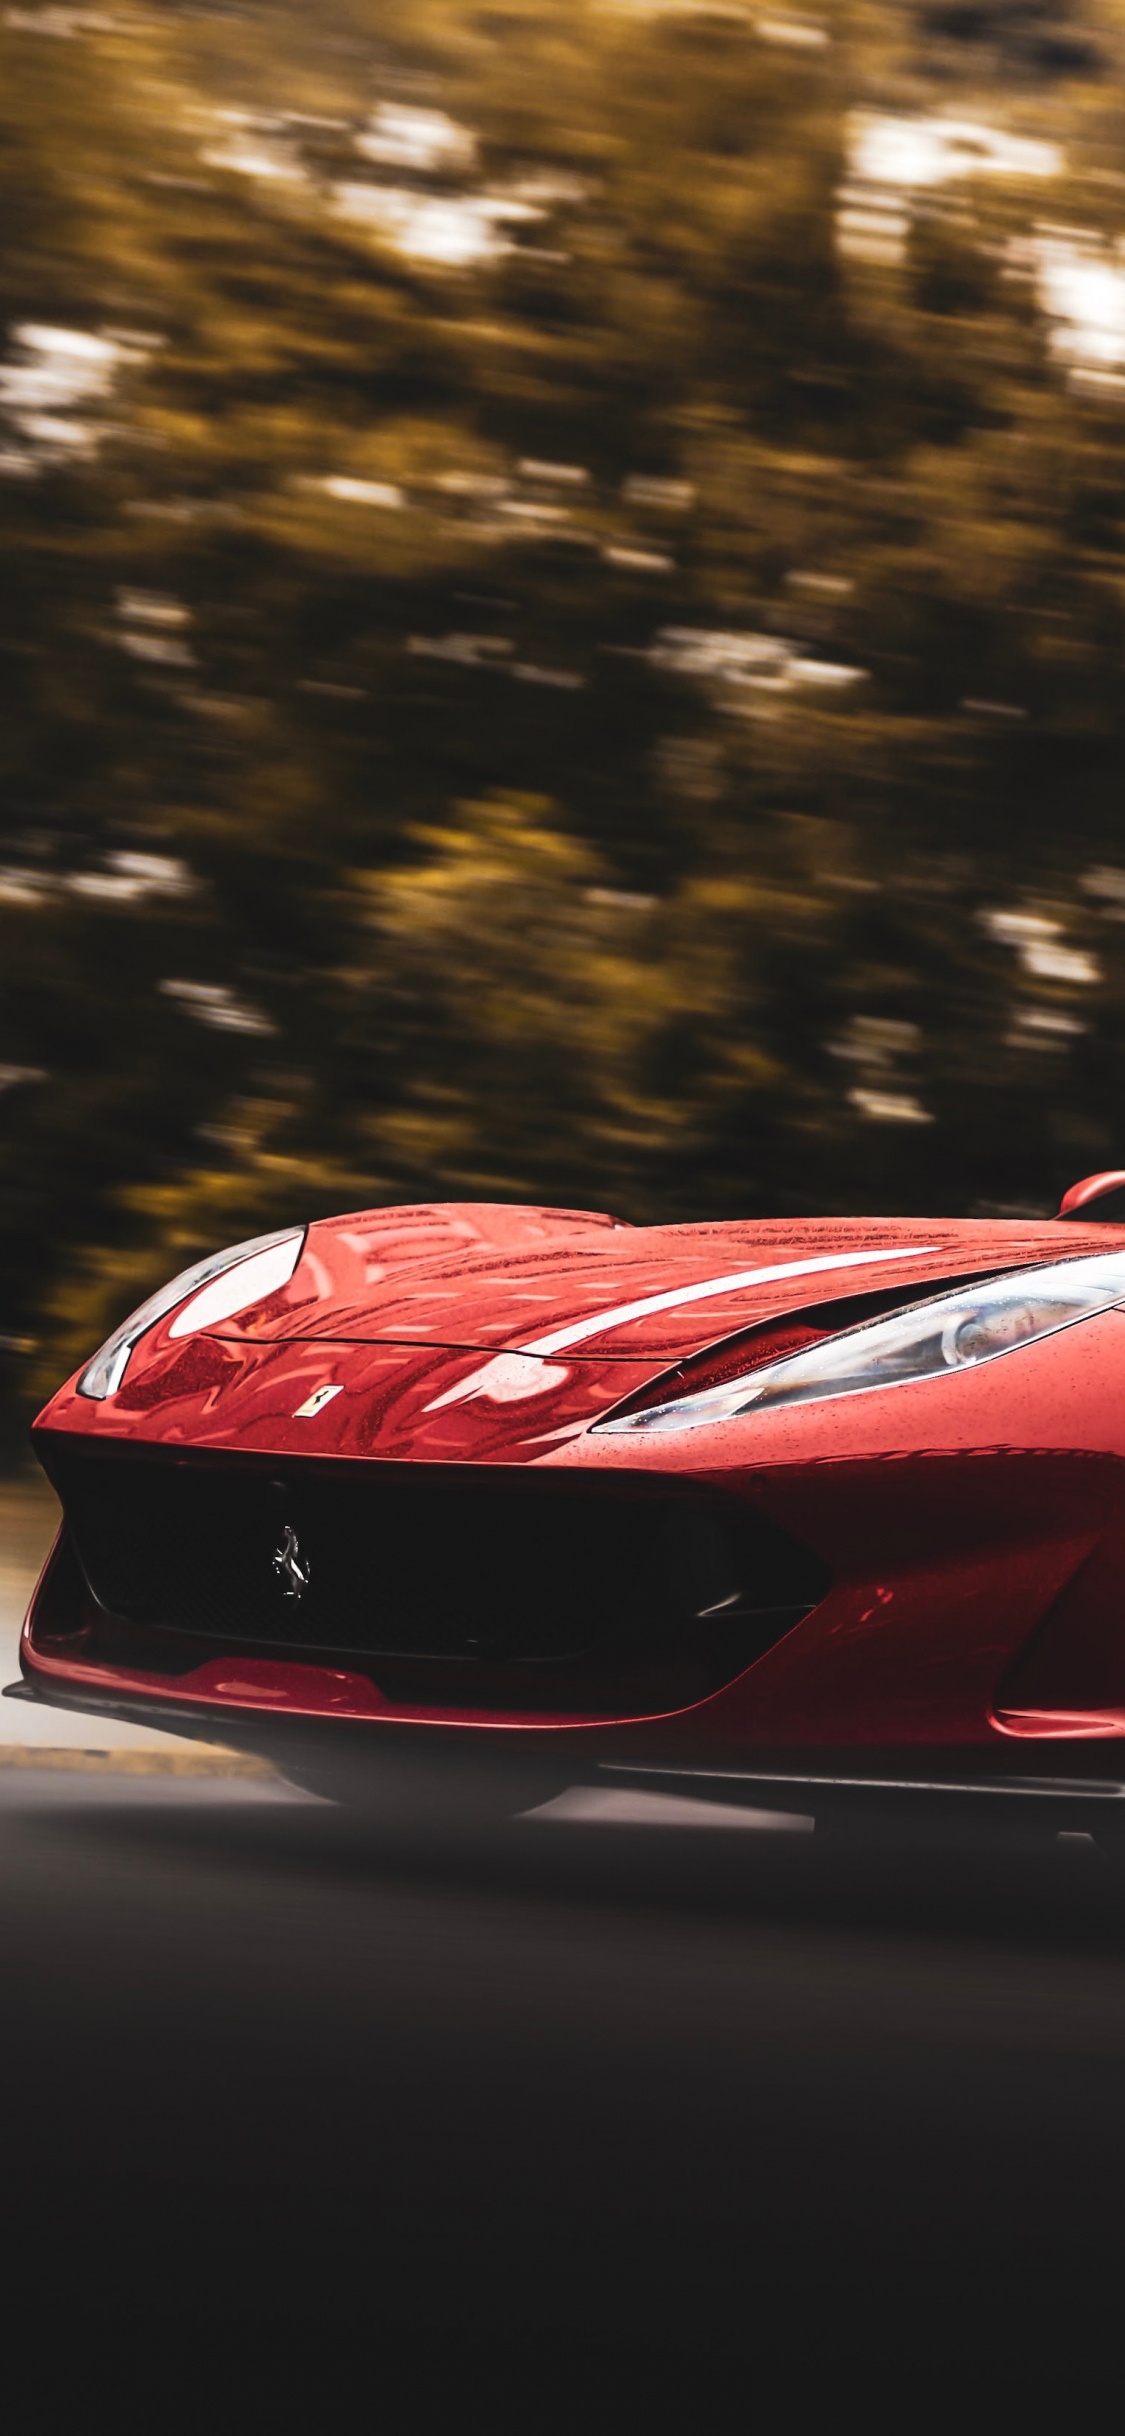 Ferrari Rouge 458 Italia Sur Route Pendant la Journée. Wallpaper in 1125x2436 Resolution